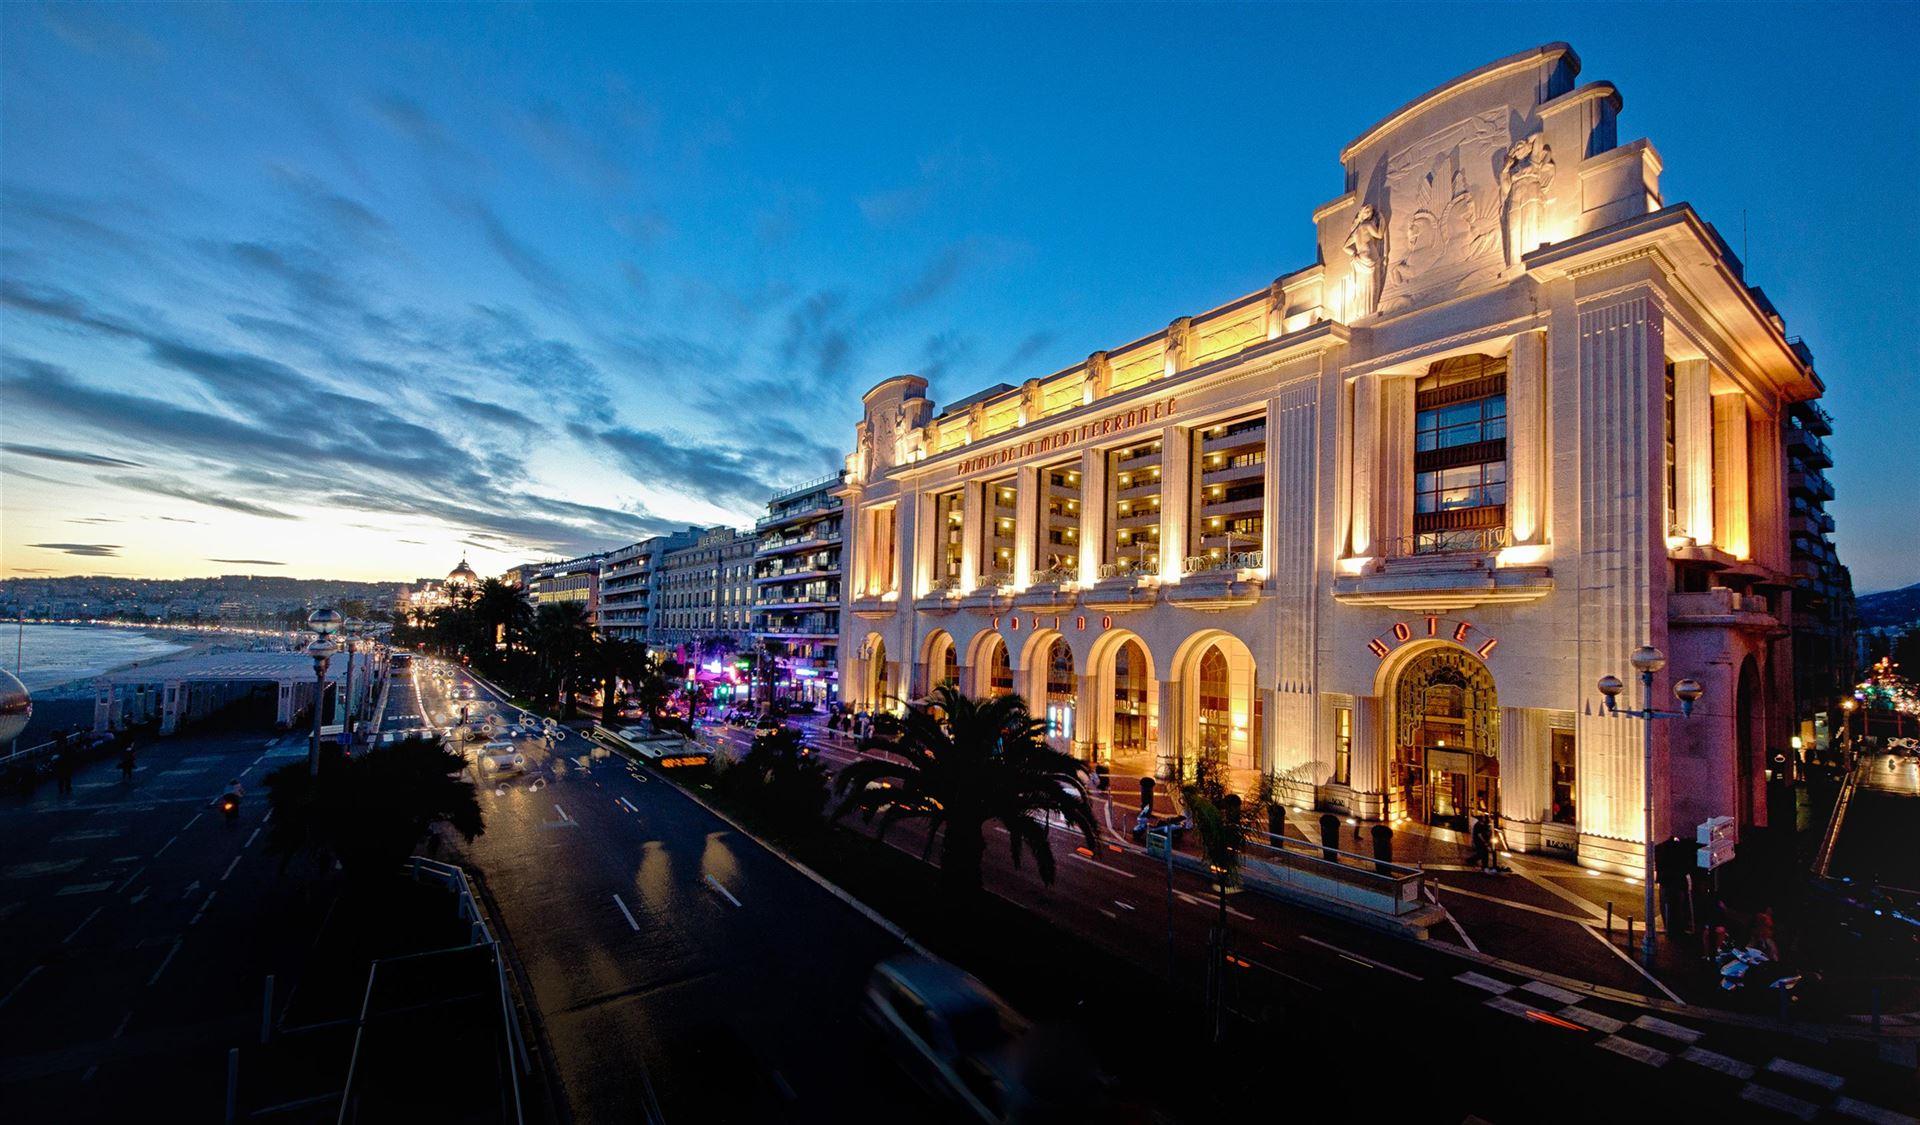 Hyatt Regency Nice Palais de la Mediterranee luxe hotel deals